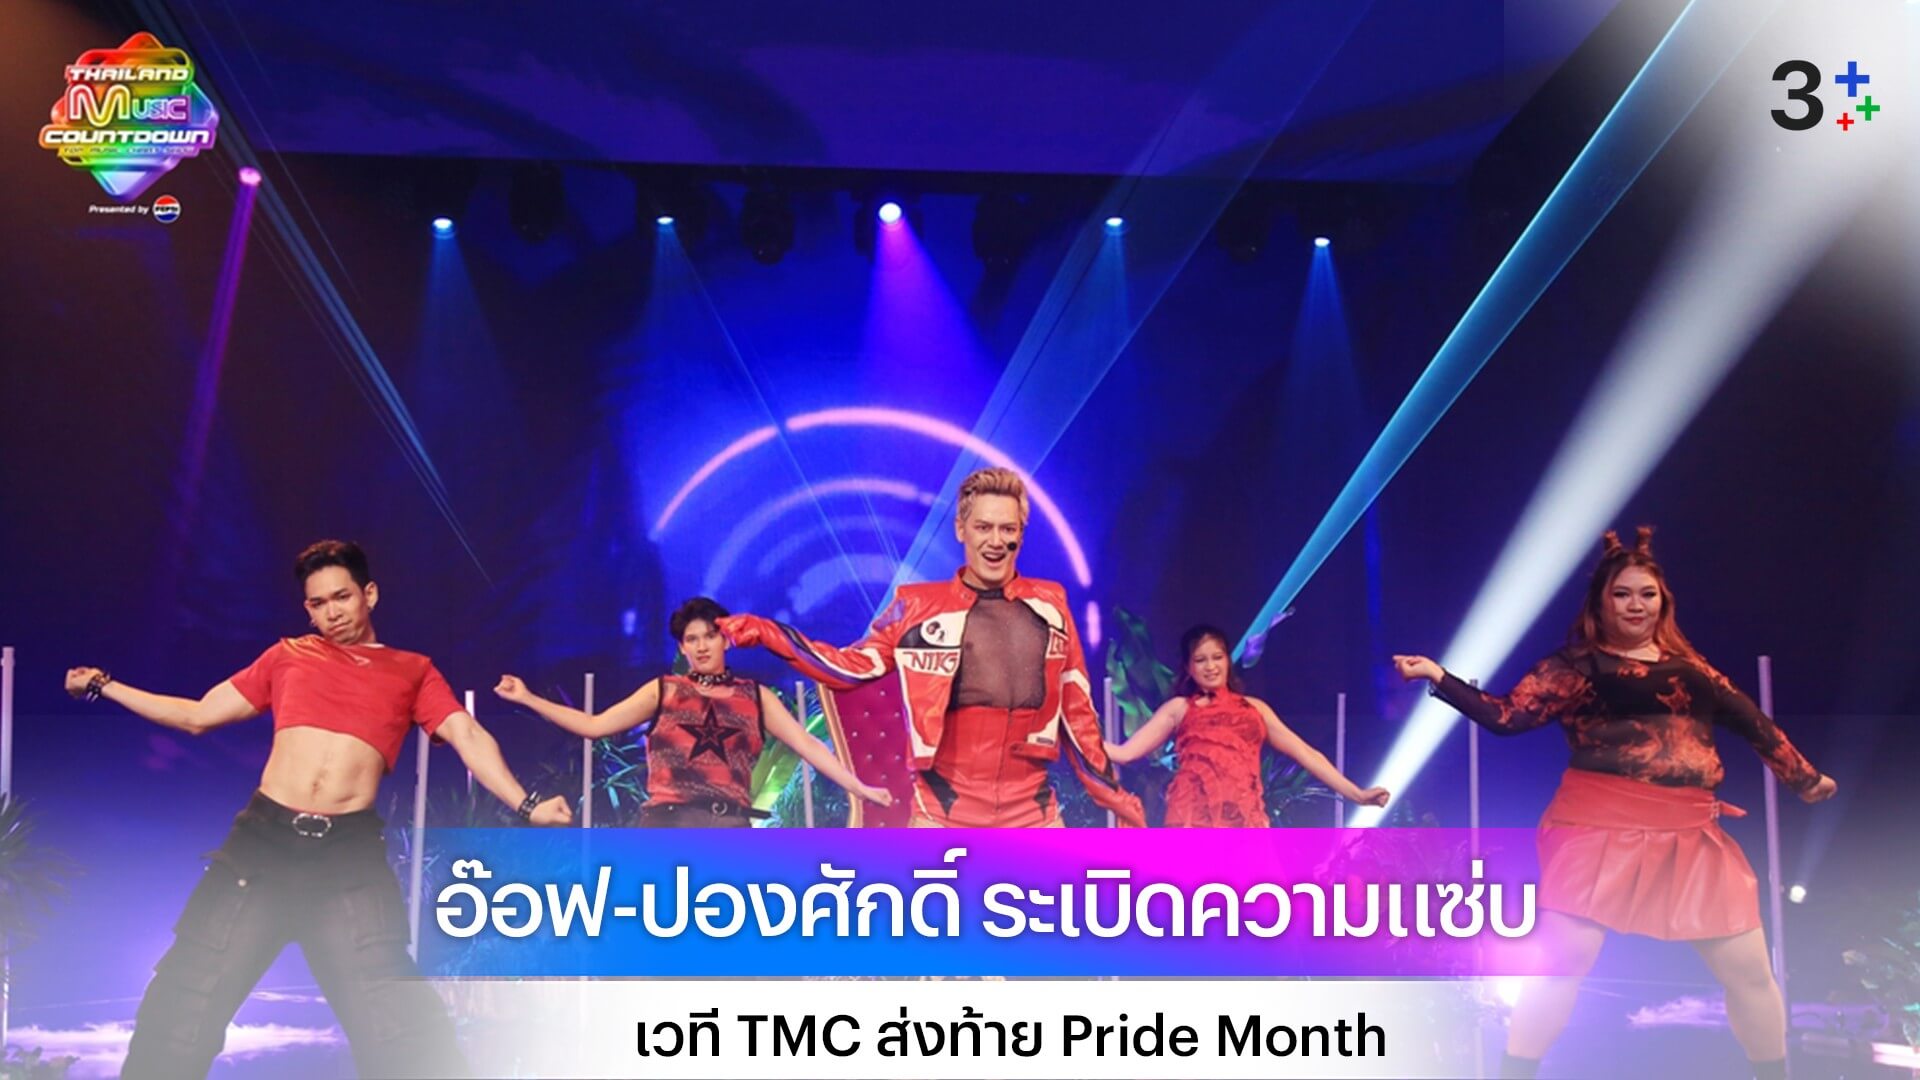 TMC ทำถึง! ชวน อ๊อฟ-ปองศักดิ์ ระเบิดความแซ่บ ส่งท้าย Pride Month อย่างอลังการ